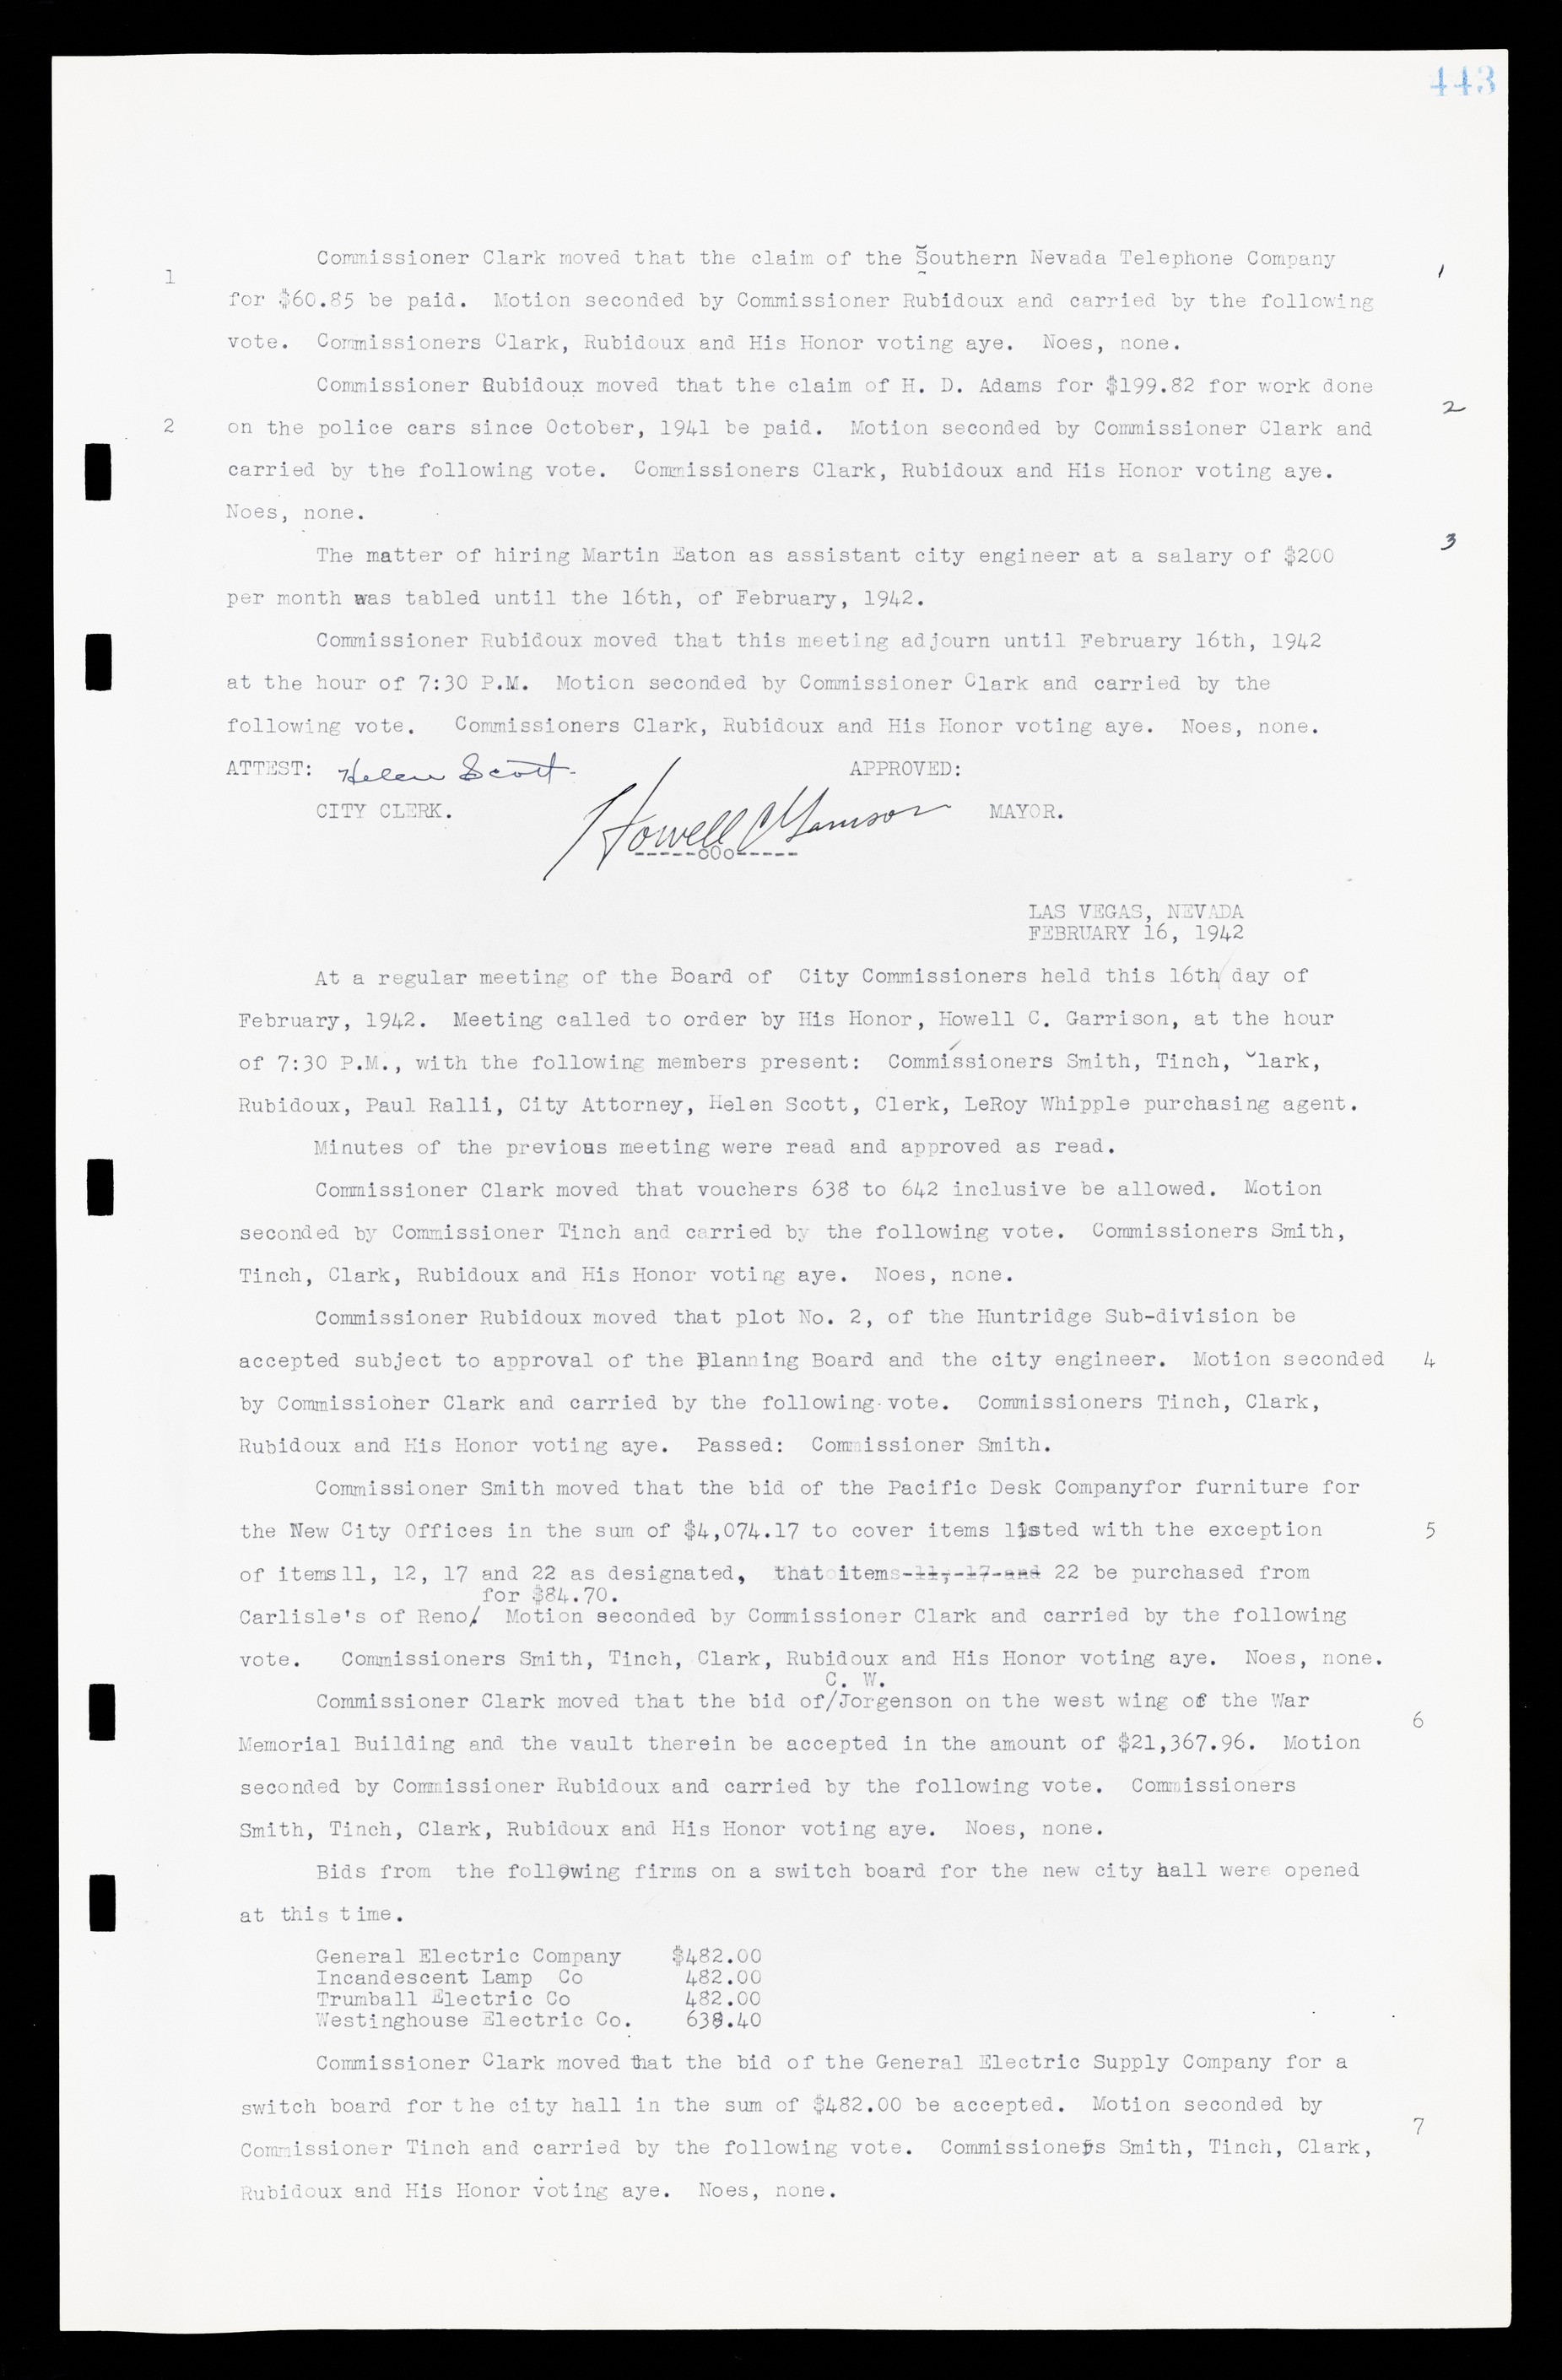 Las Vegas City Commission Minutes, February 17, 1937 to August 4, 1942, lvc000004-471